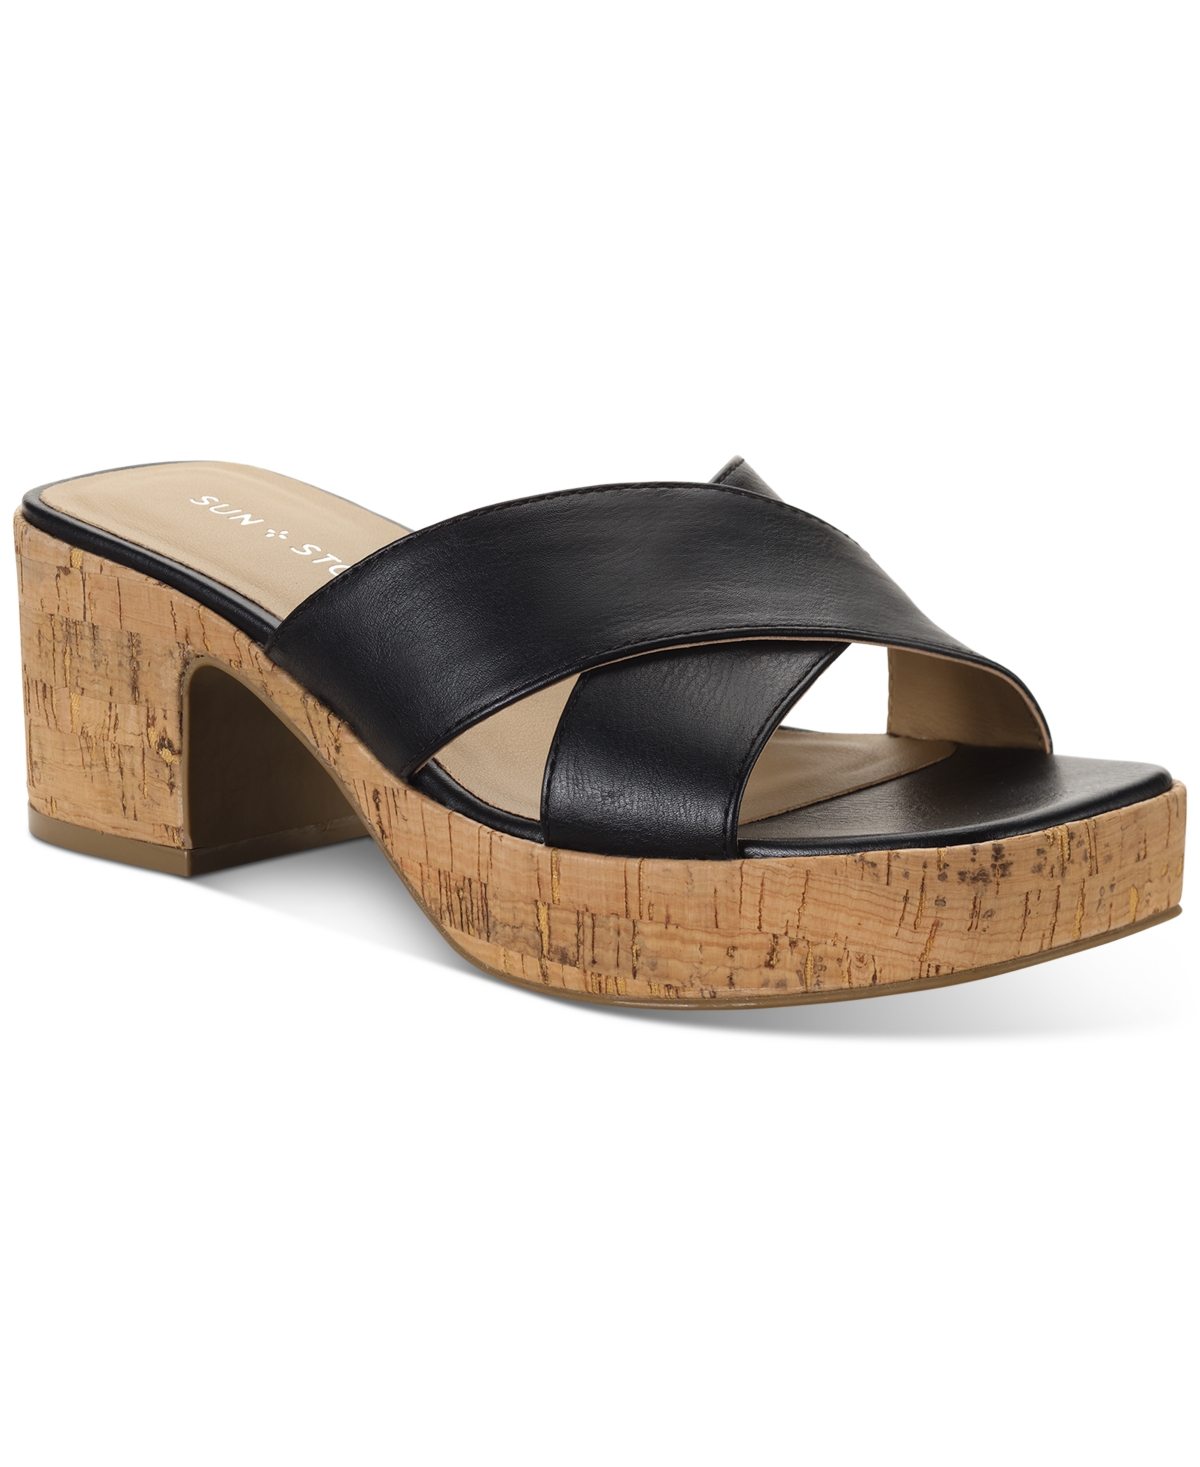 Giigi Crisscross Wedge Sandals, Created for Macy's - Black